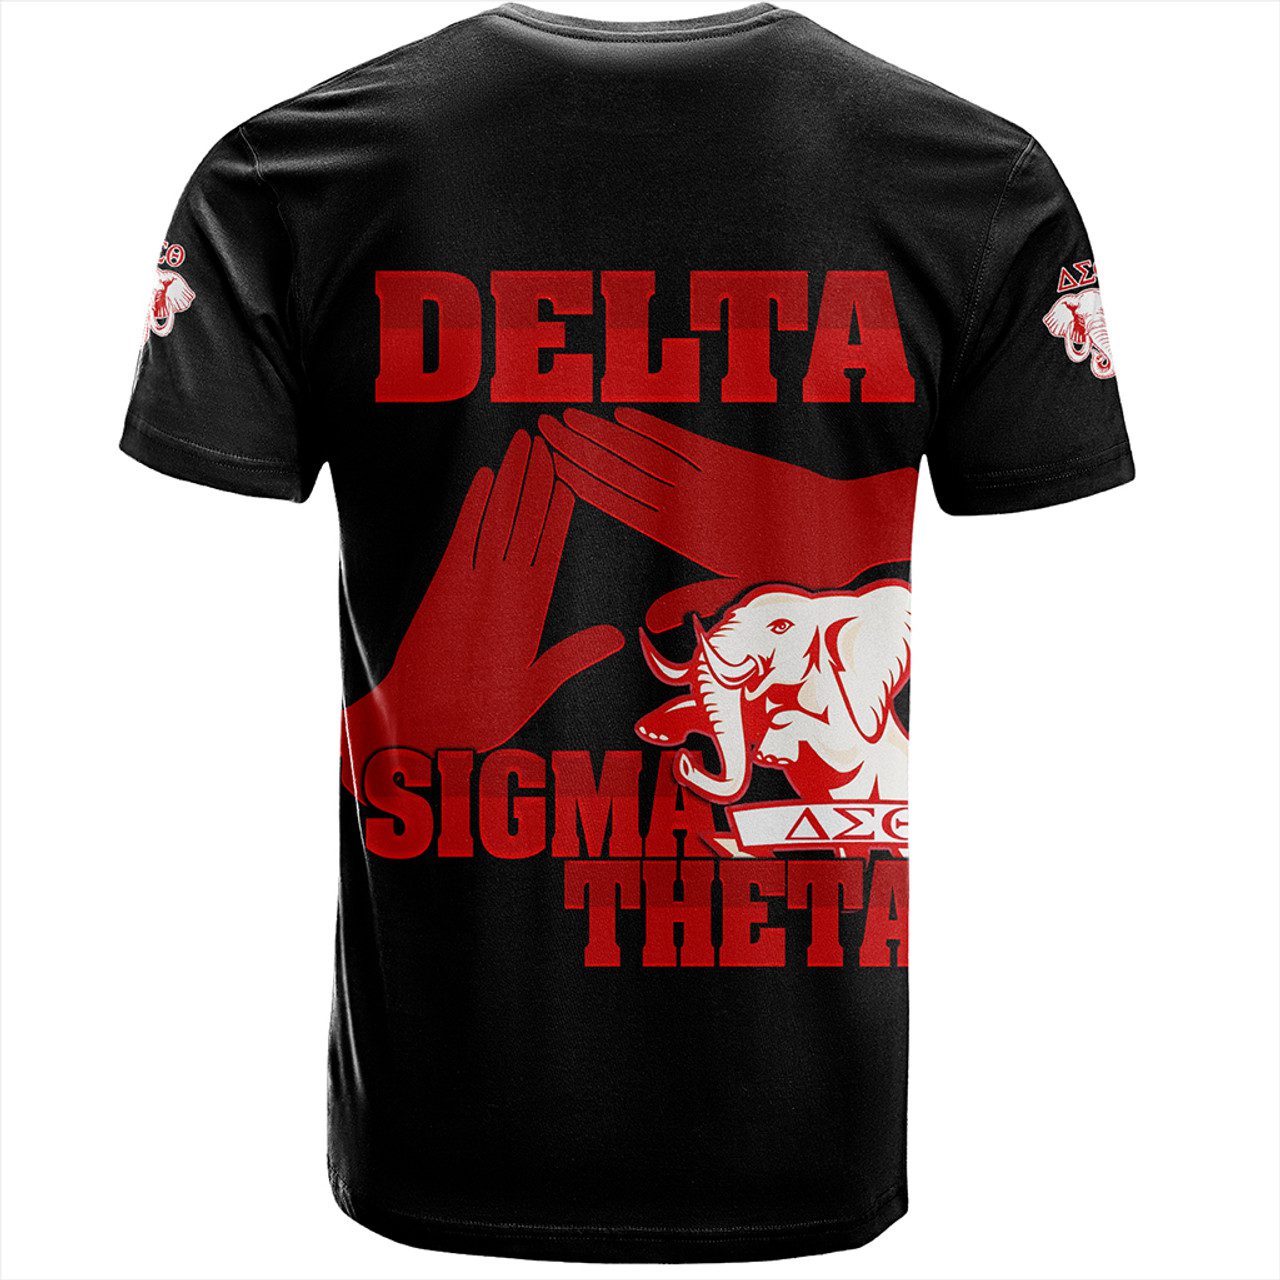 Delta Sigma Theta T-Shirt Letters